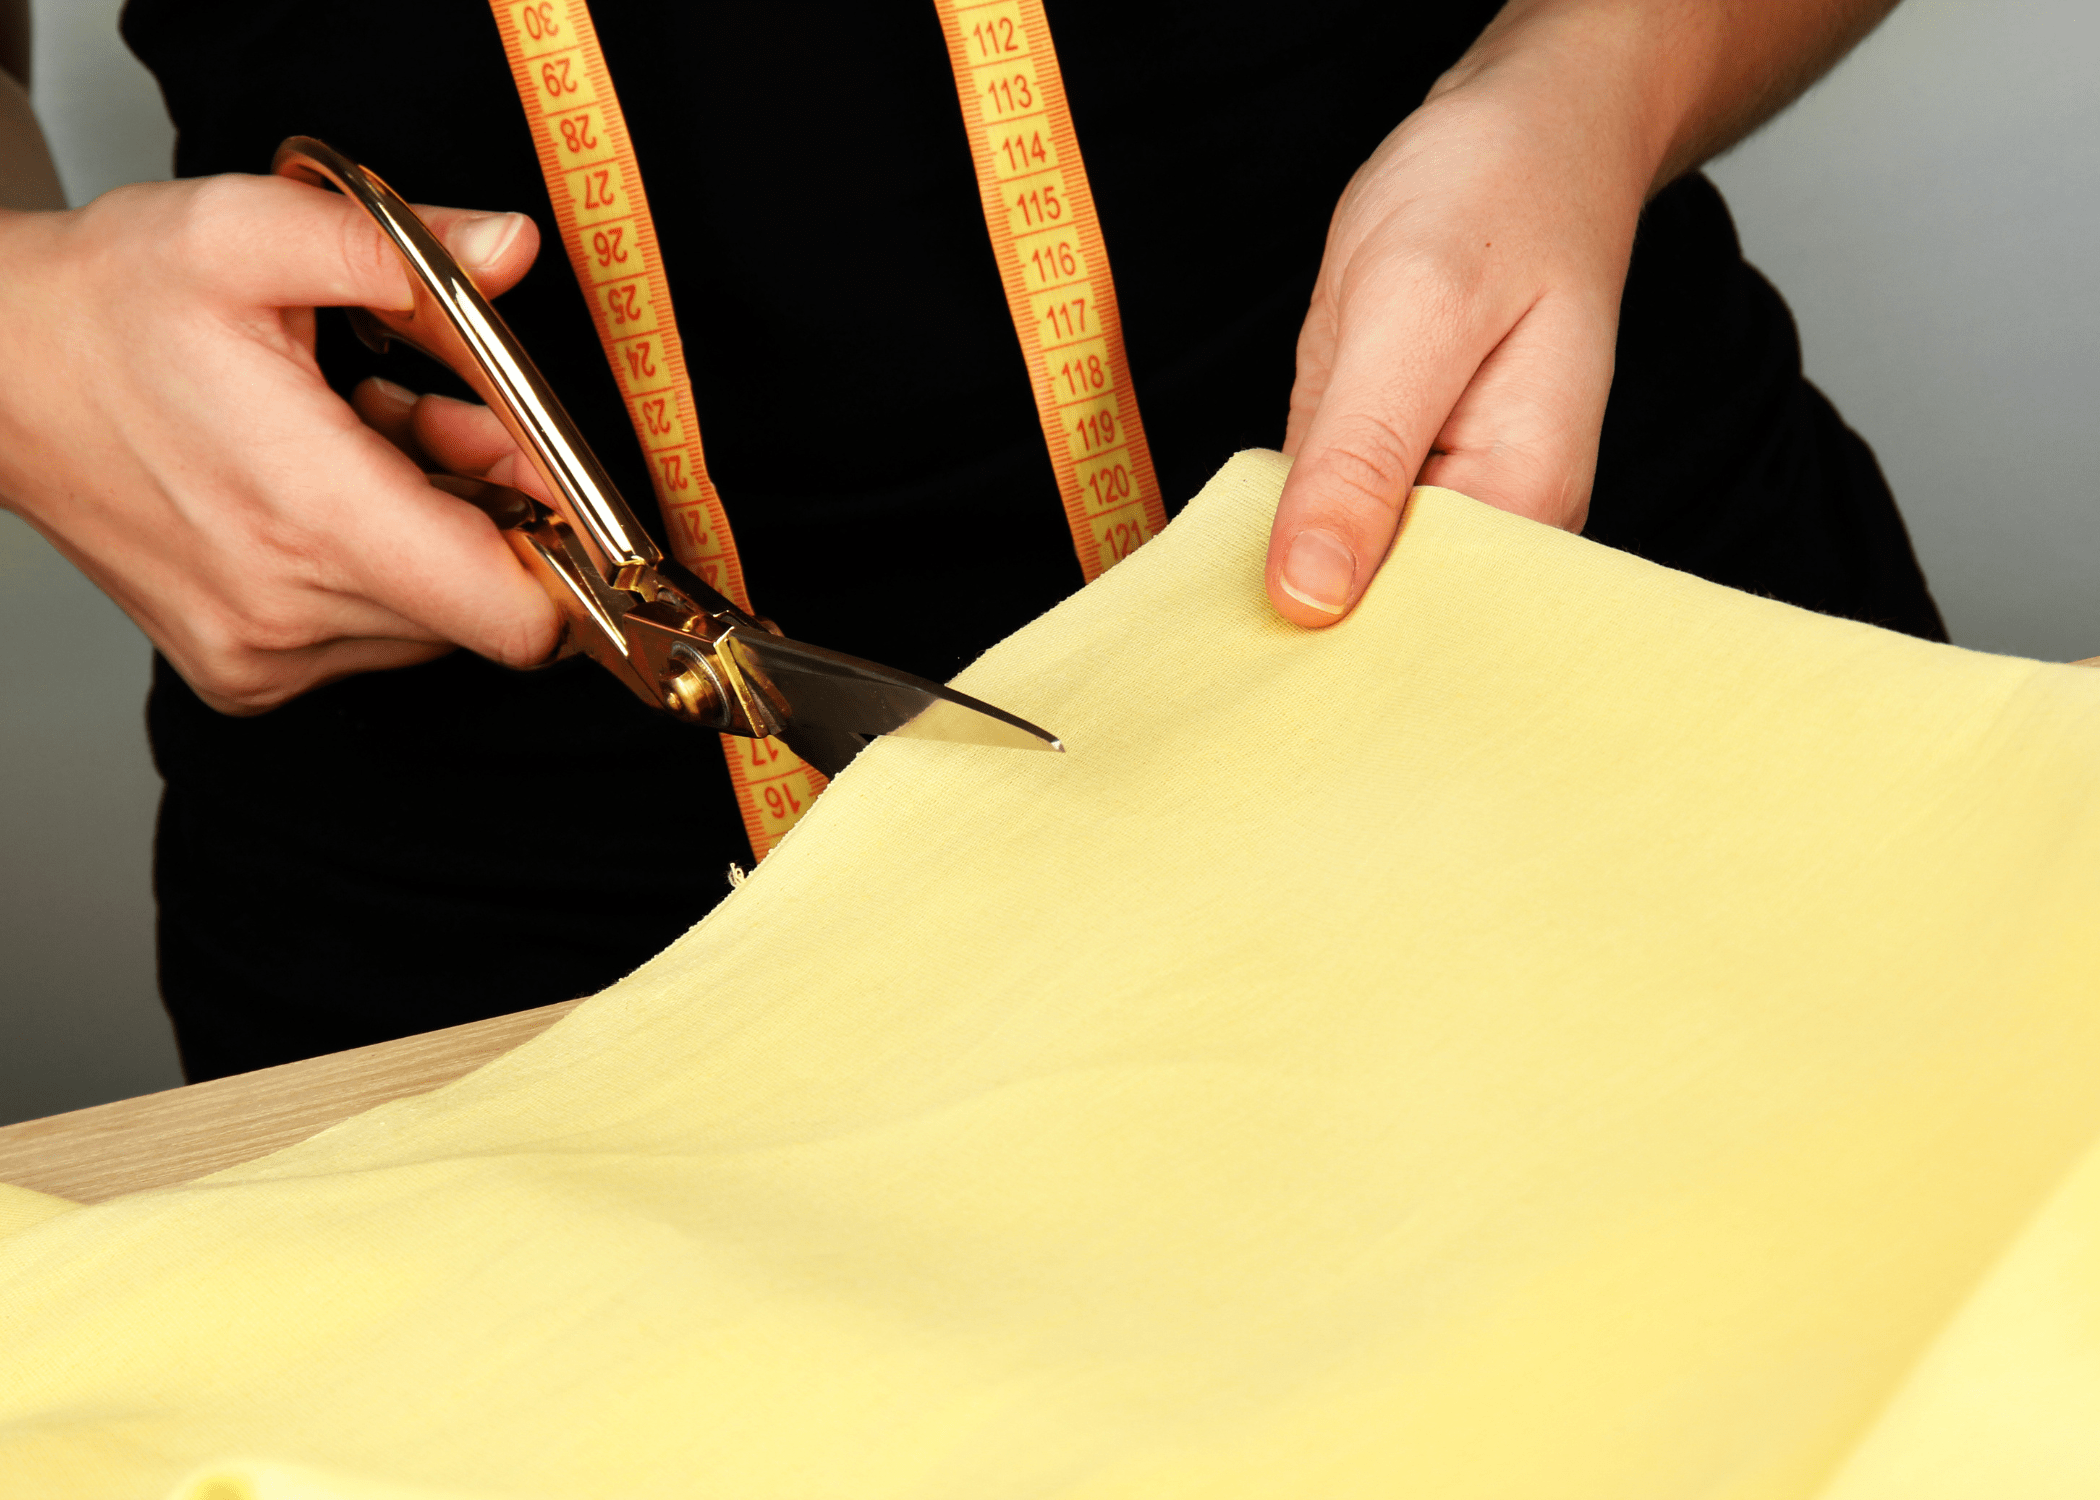 cutting fabric with scissors